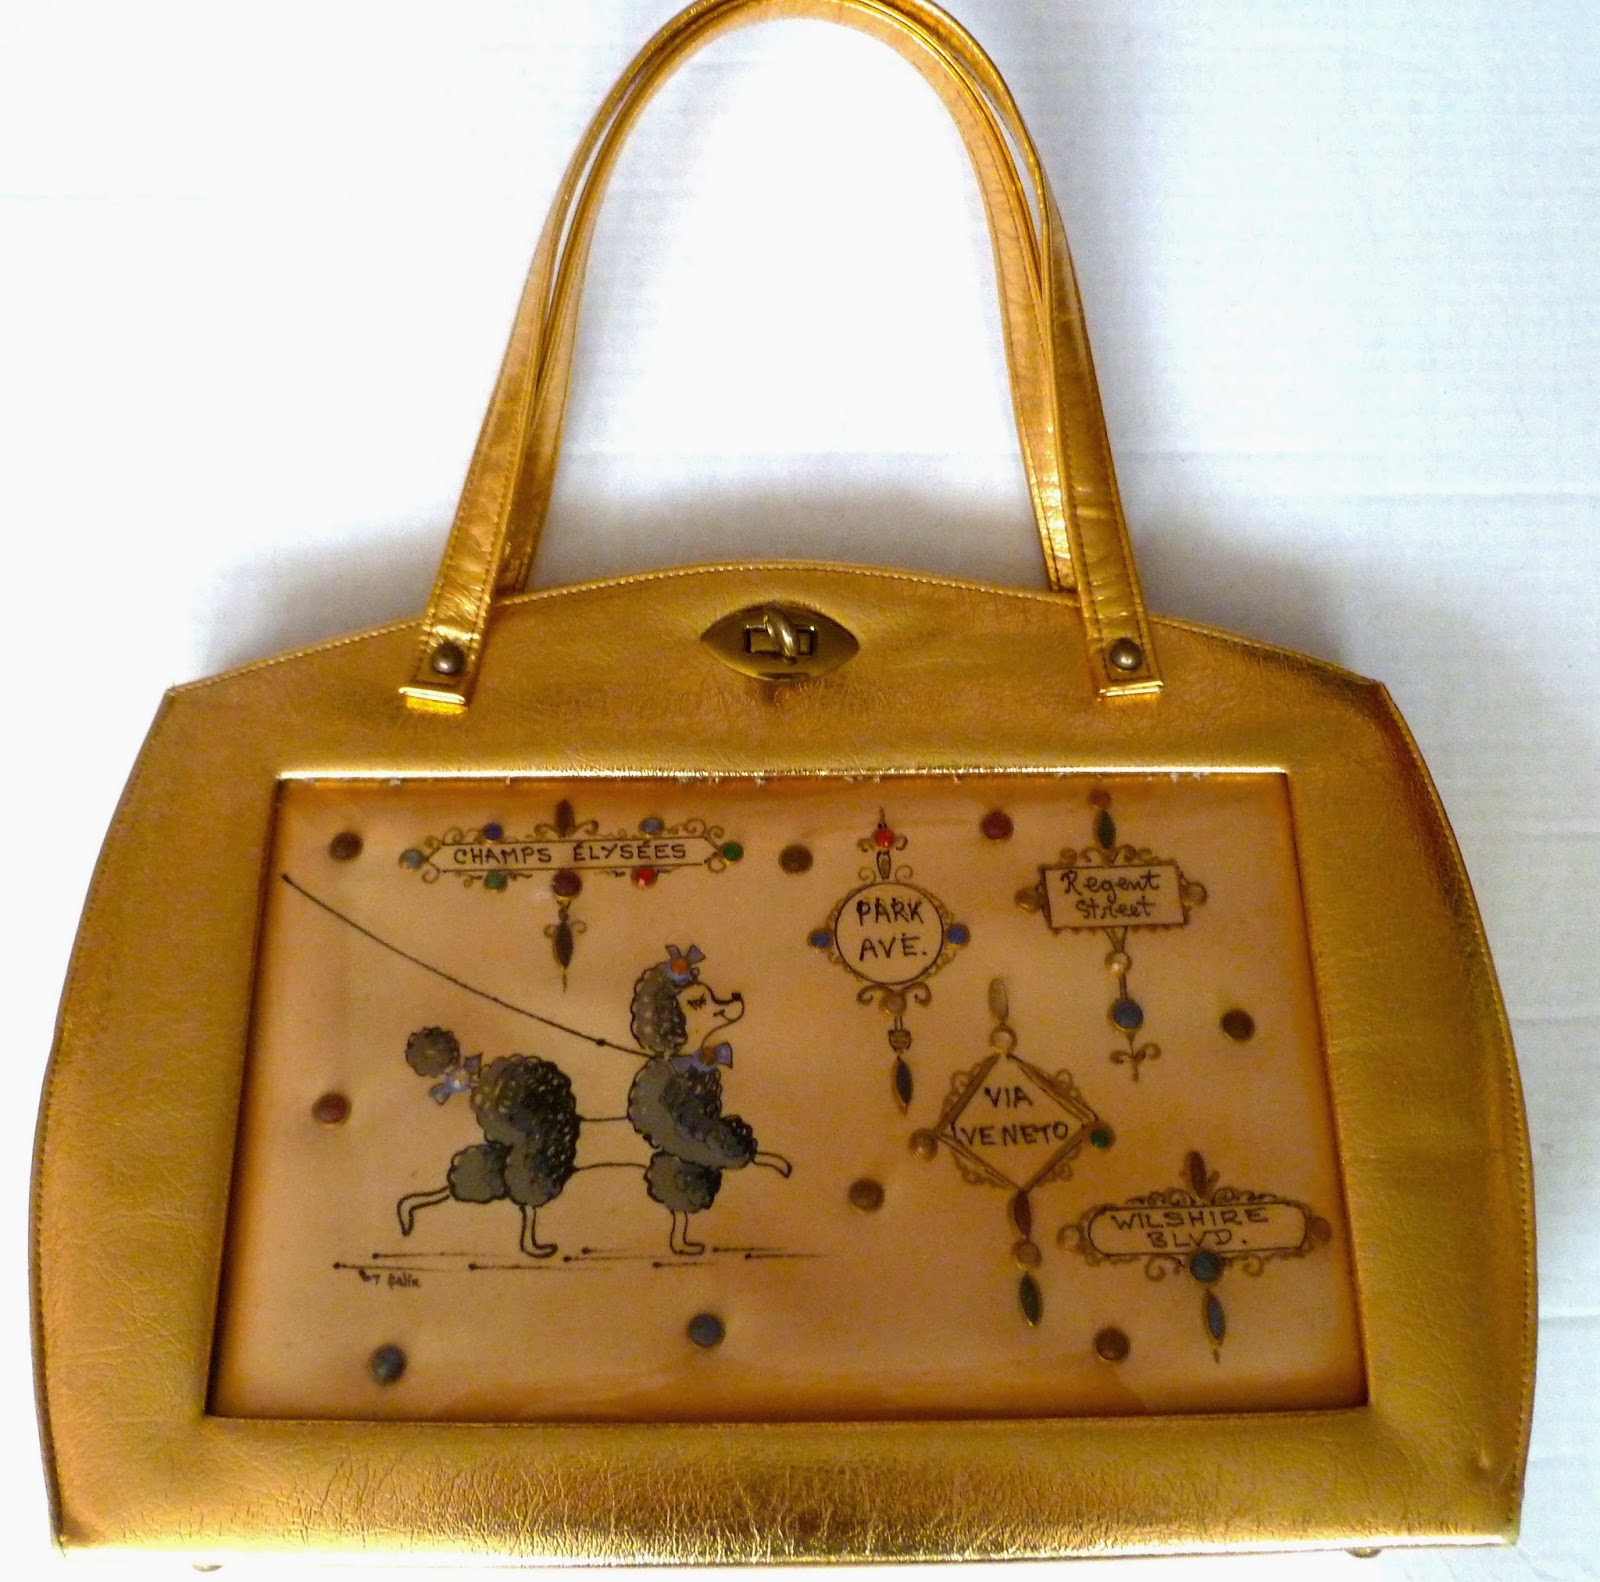 Distinct Vintage Black eyelet Fleurette of Miami box bag purse handbag